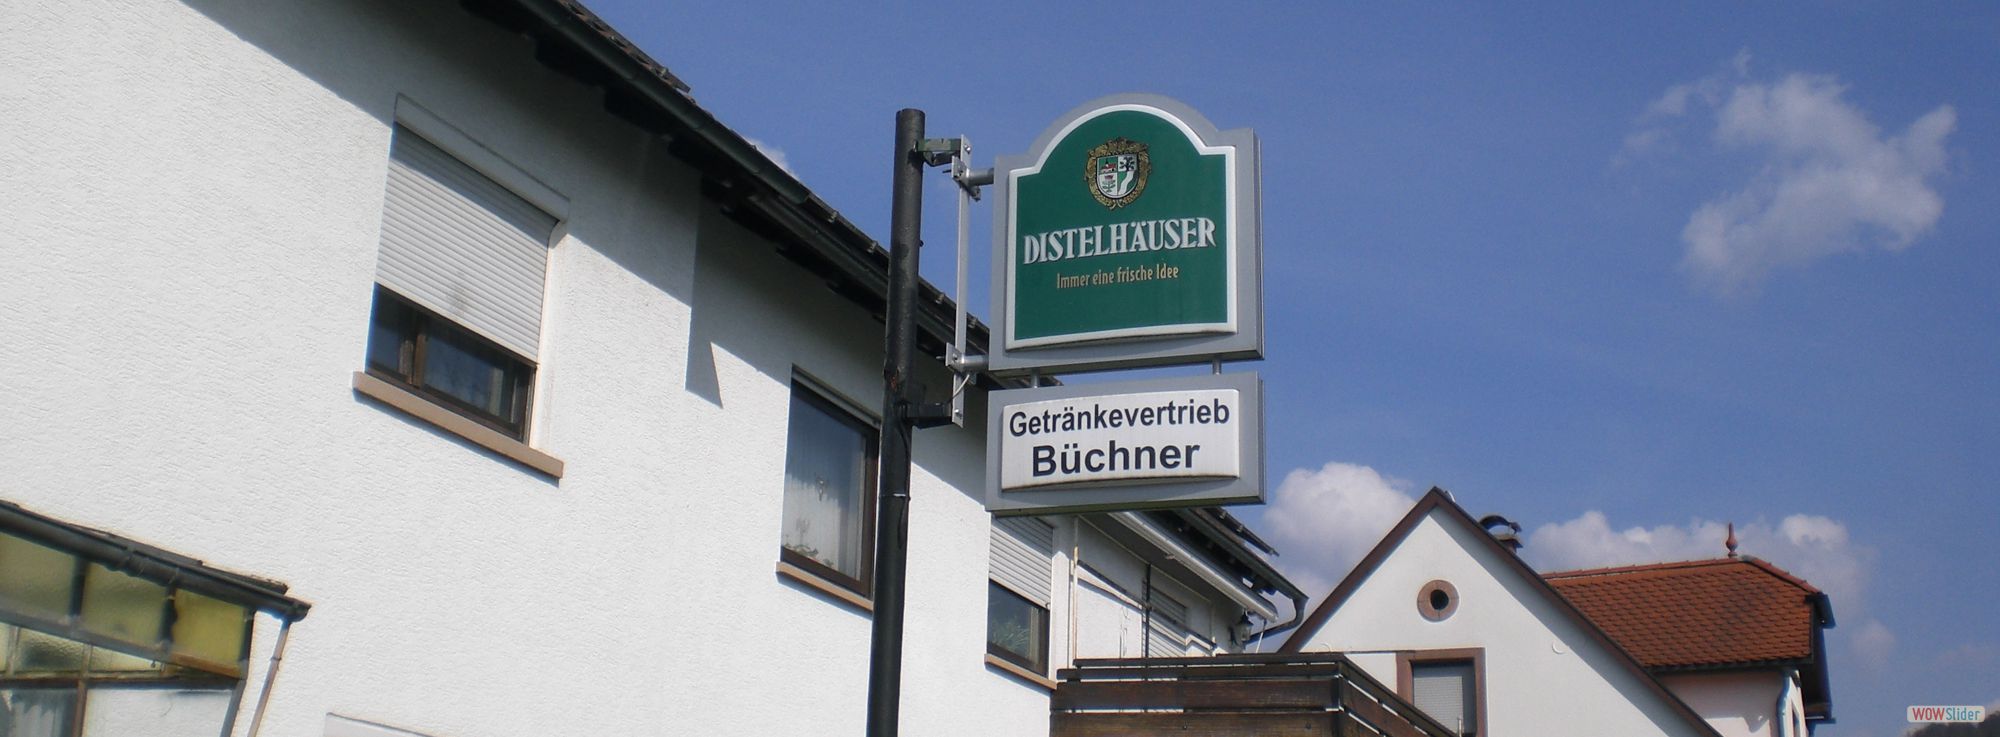 buechner7007